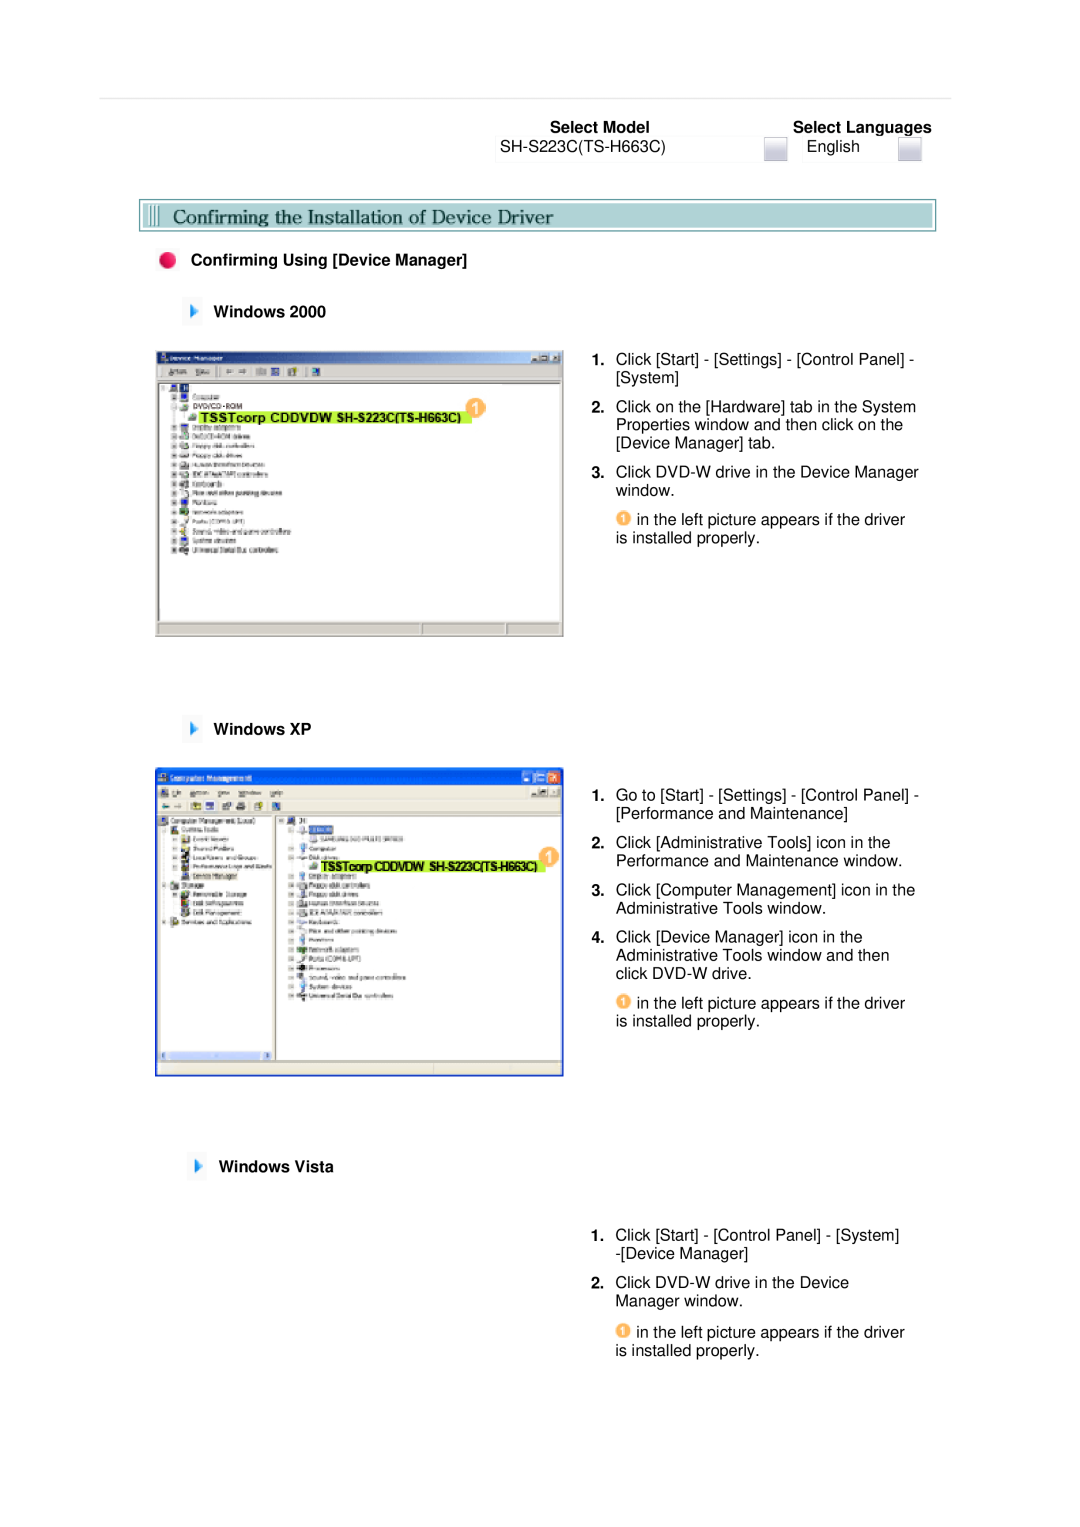 Samsung SH-S223C Select Model, Confirming Using Device Manager Windows, Select Languages, Windows XP, Windows Vista 